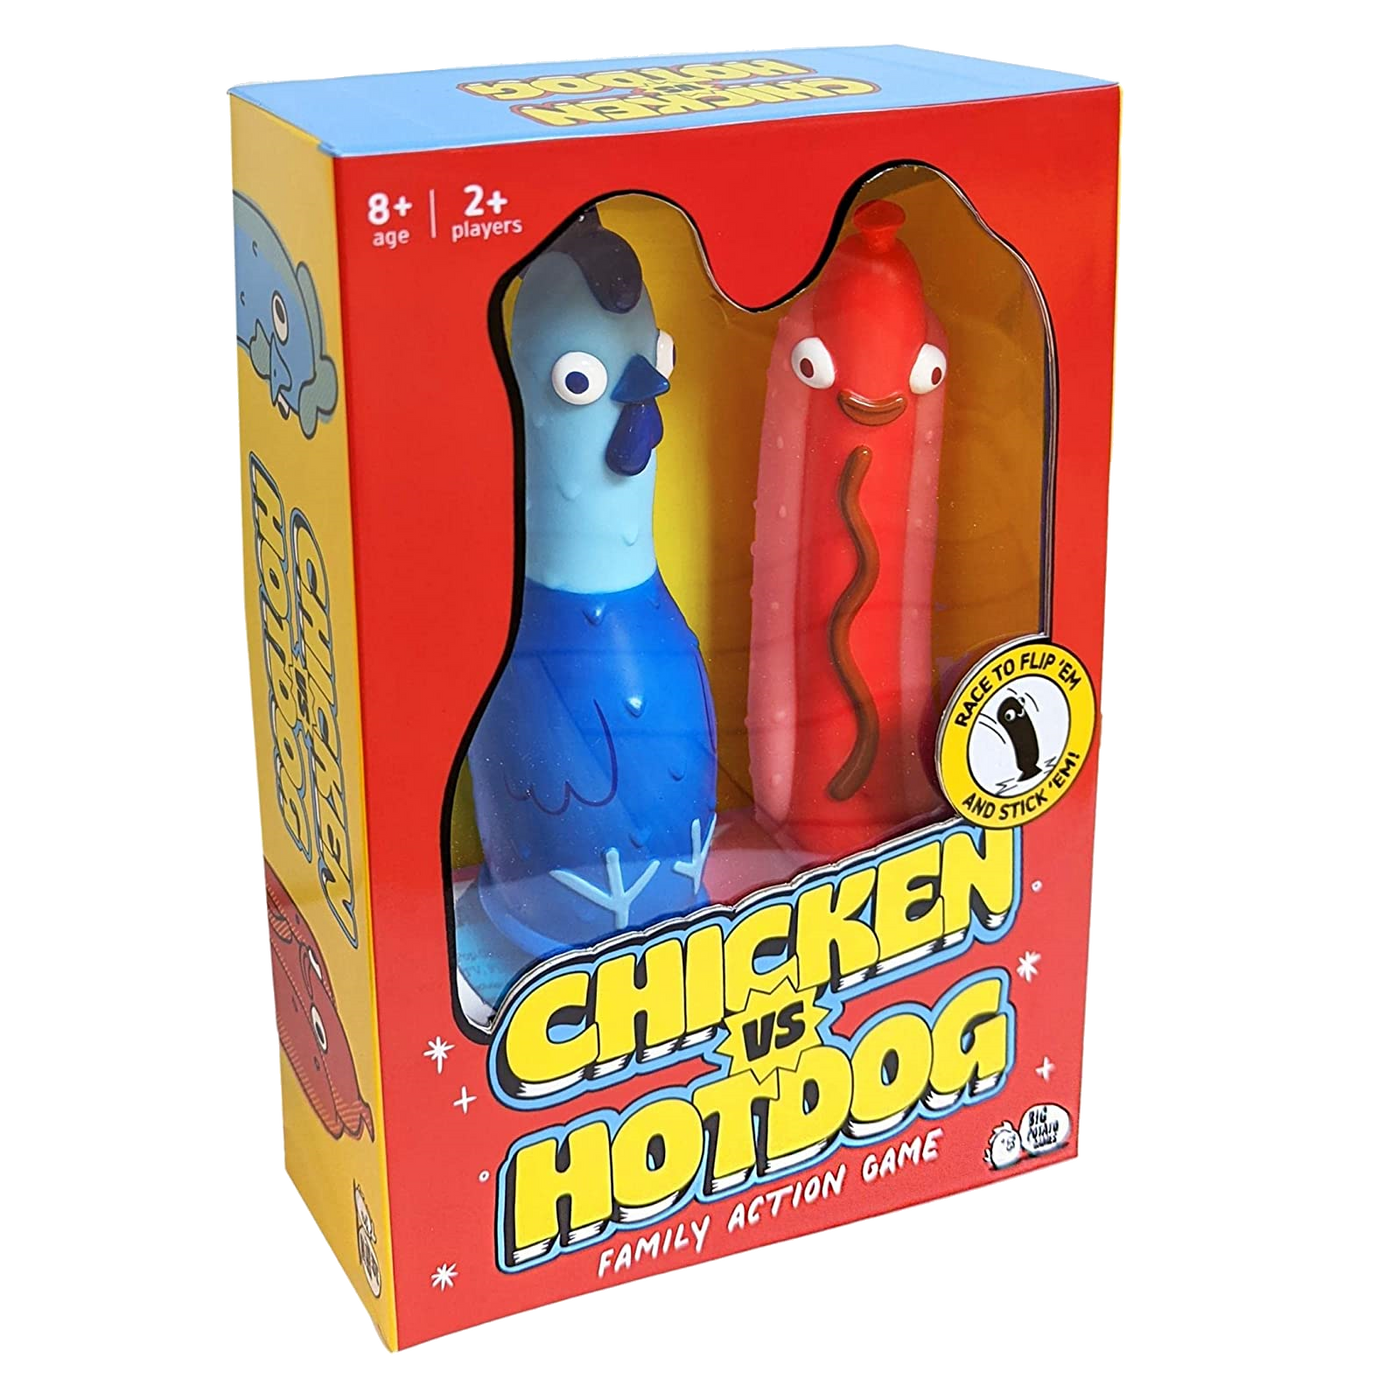 Chicken Vs Hotdog